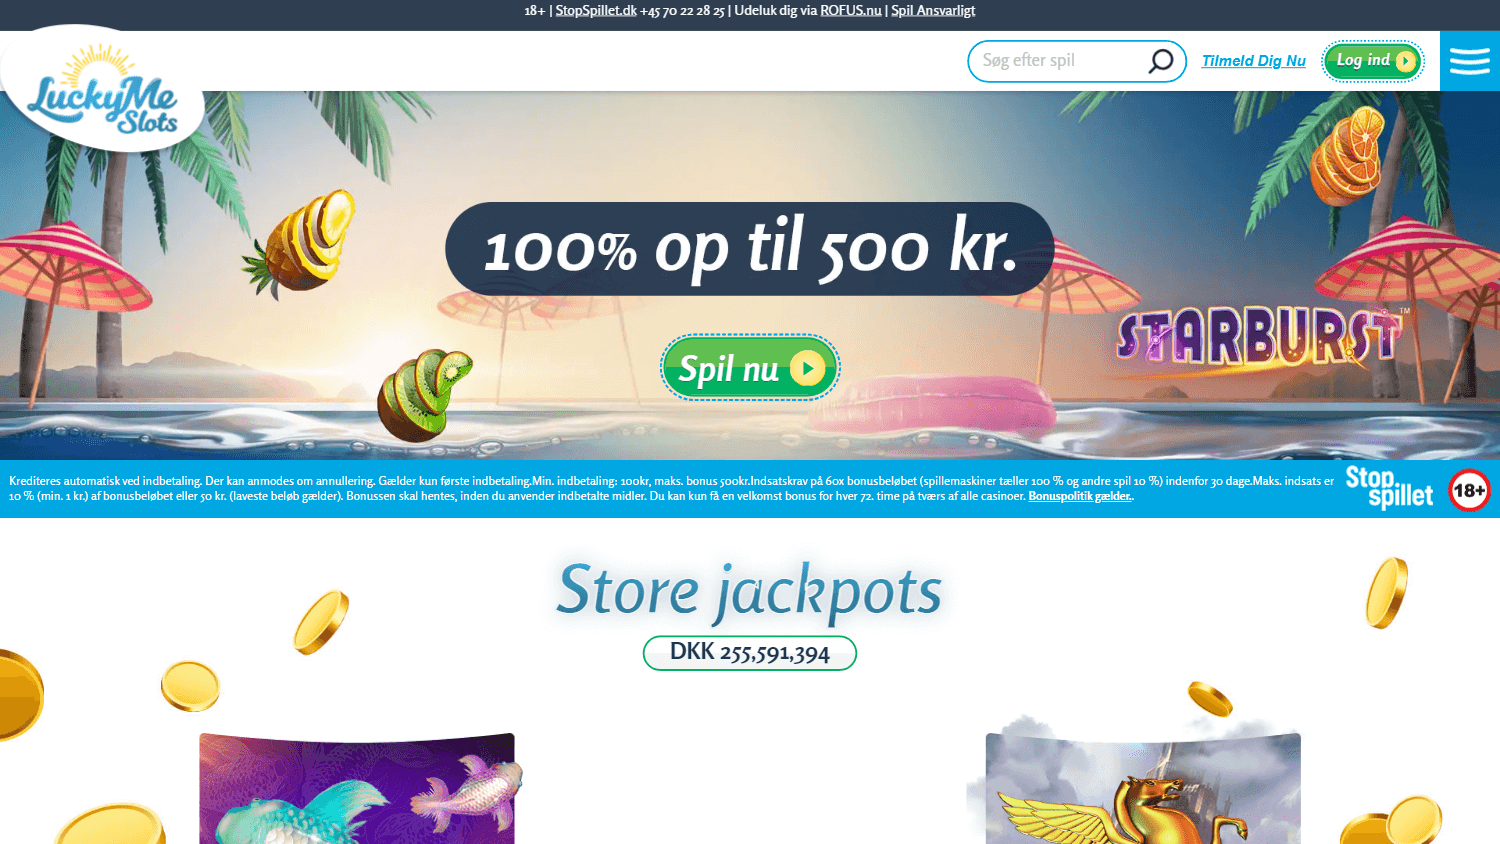 lucky_me_slots_casino_dk_homepage_desktop